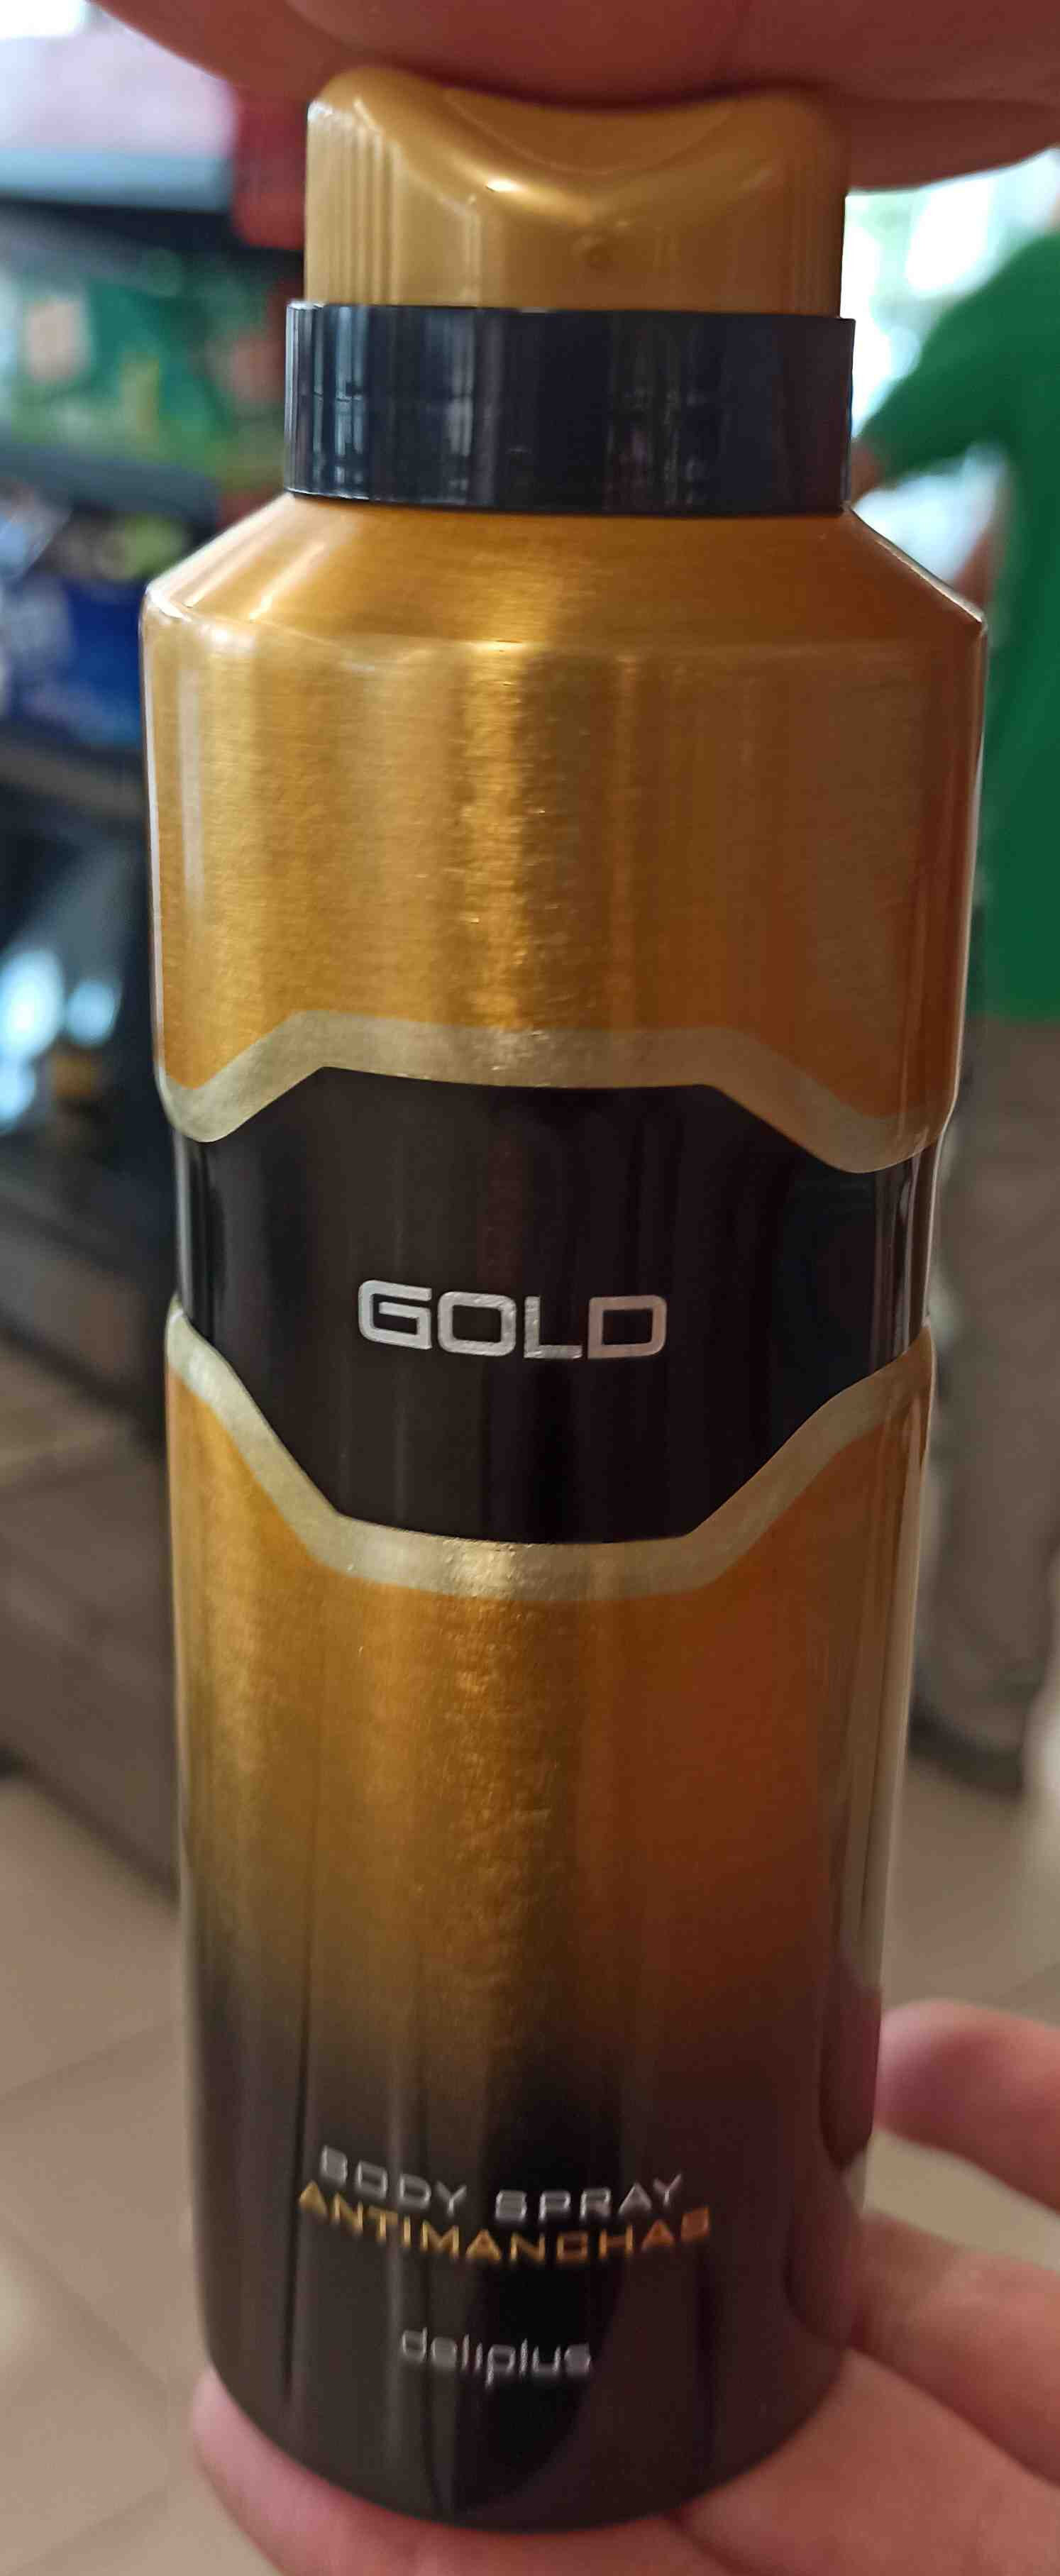 Desodorante gold - Product